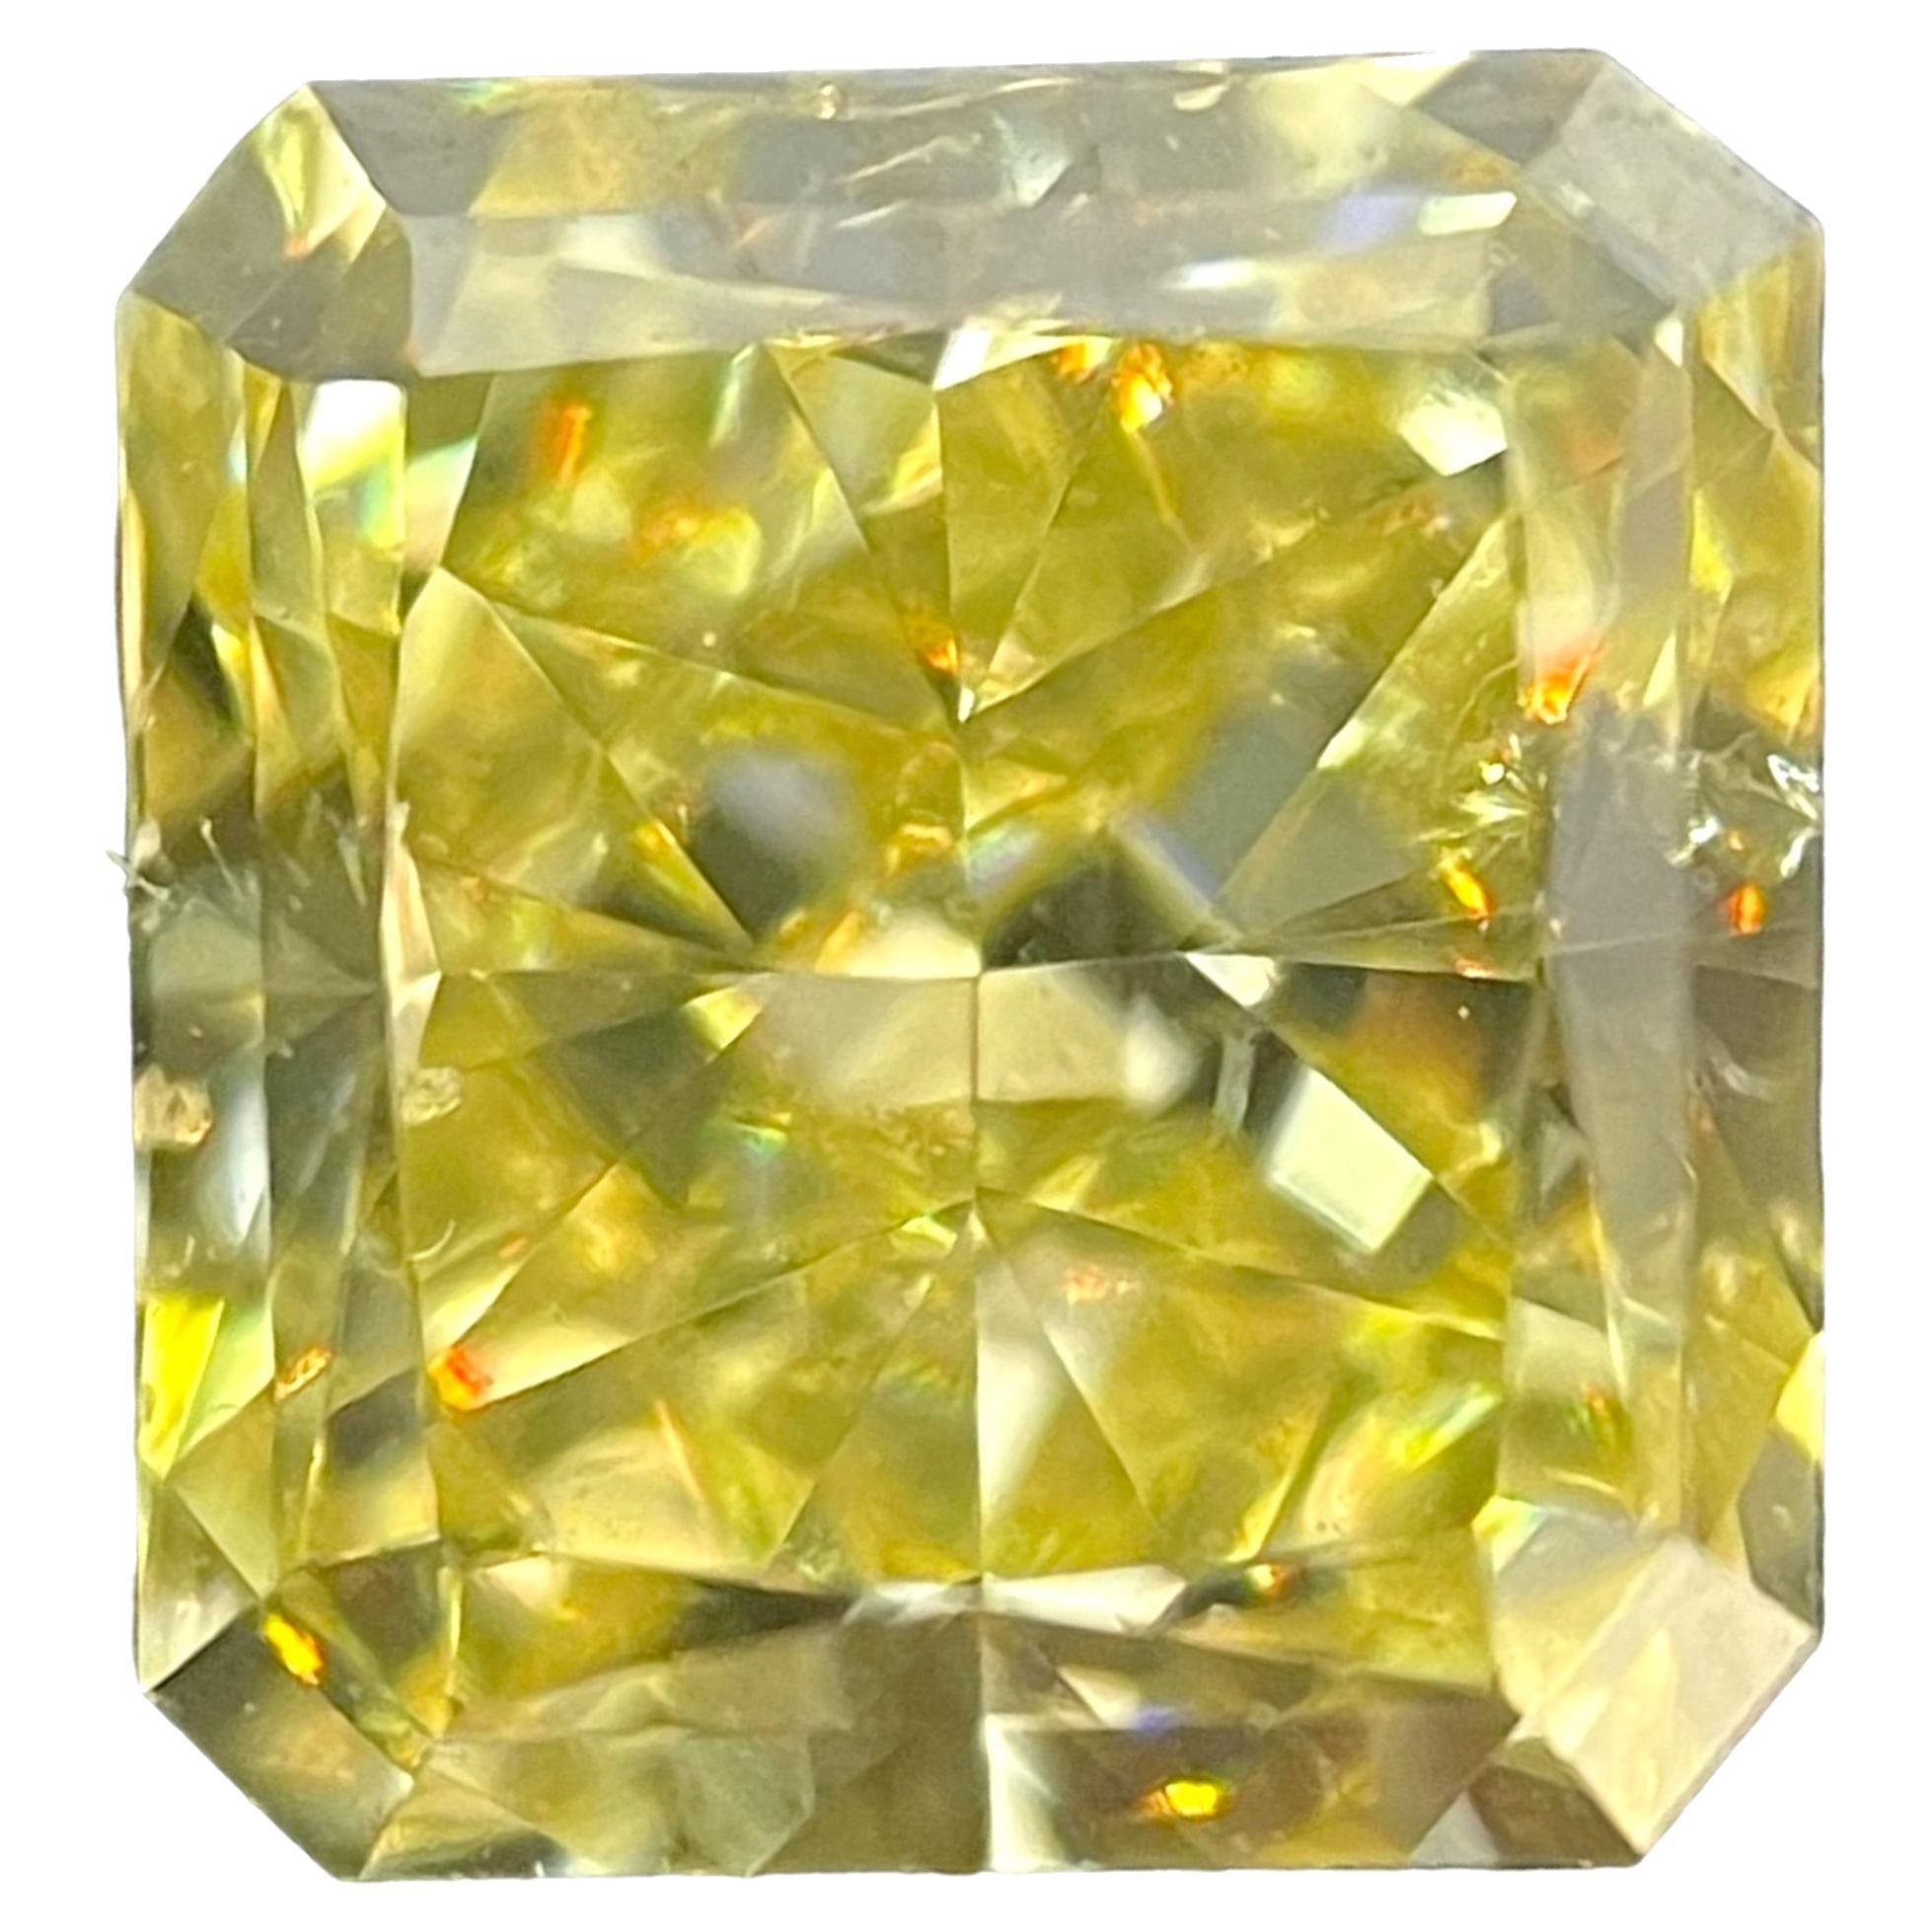 1.01 Carat Rectangular Brilliant Gia Certified Fancy Yellow I1 Clarity Diamond For Sale